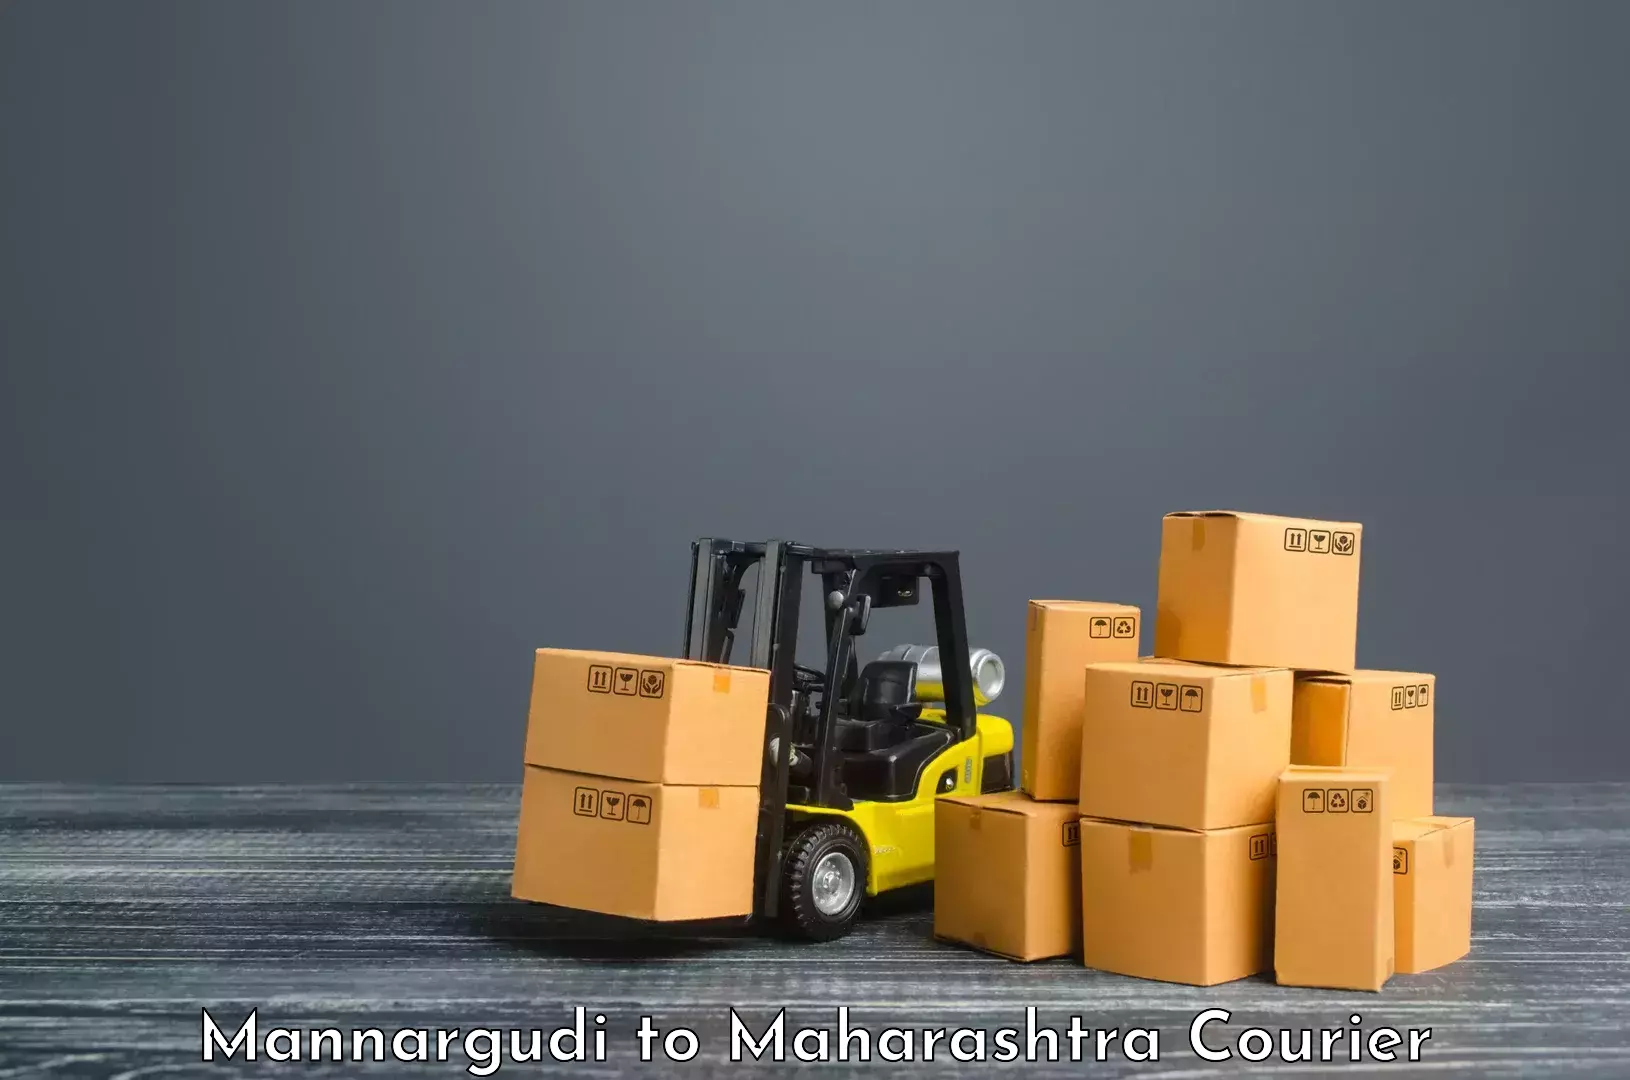 Specialized shipment handling Mannargudi to Bhiwandi